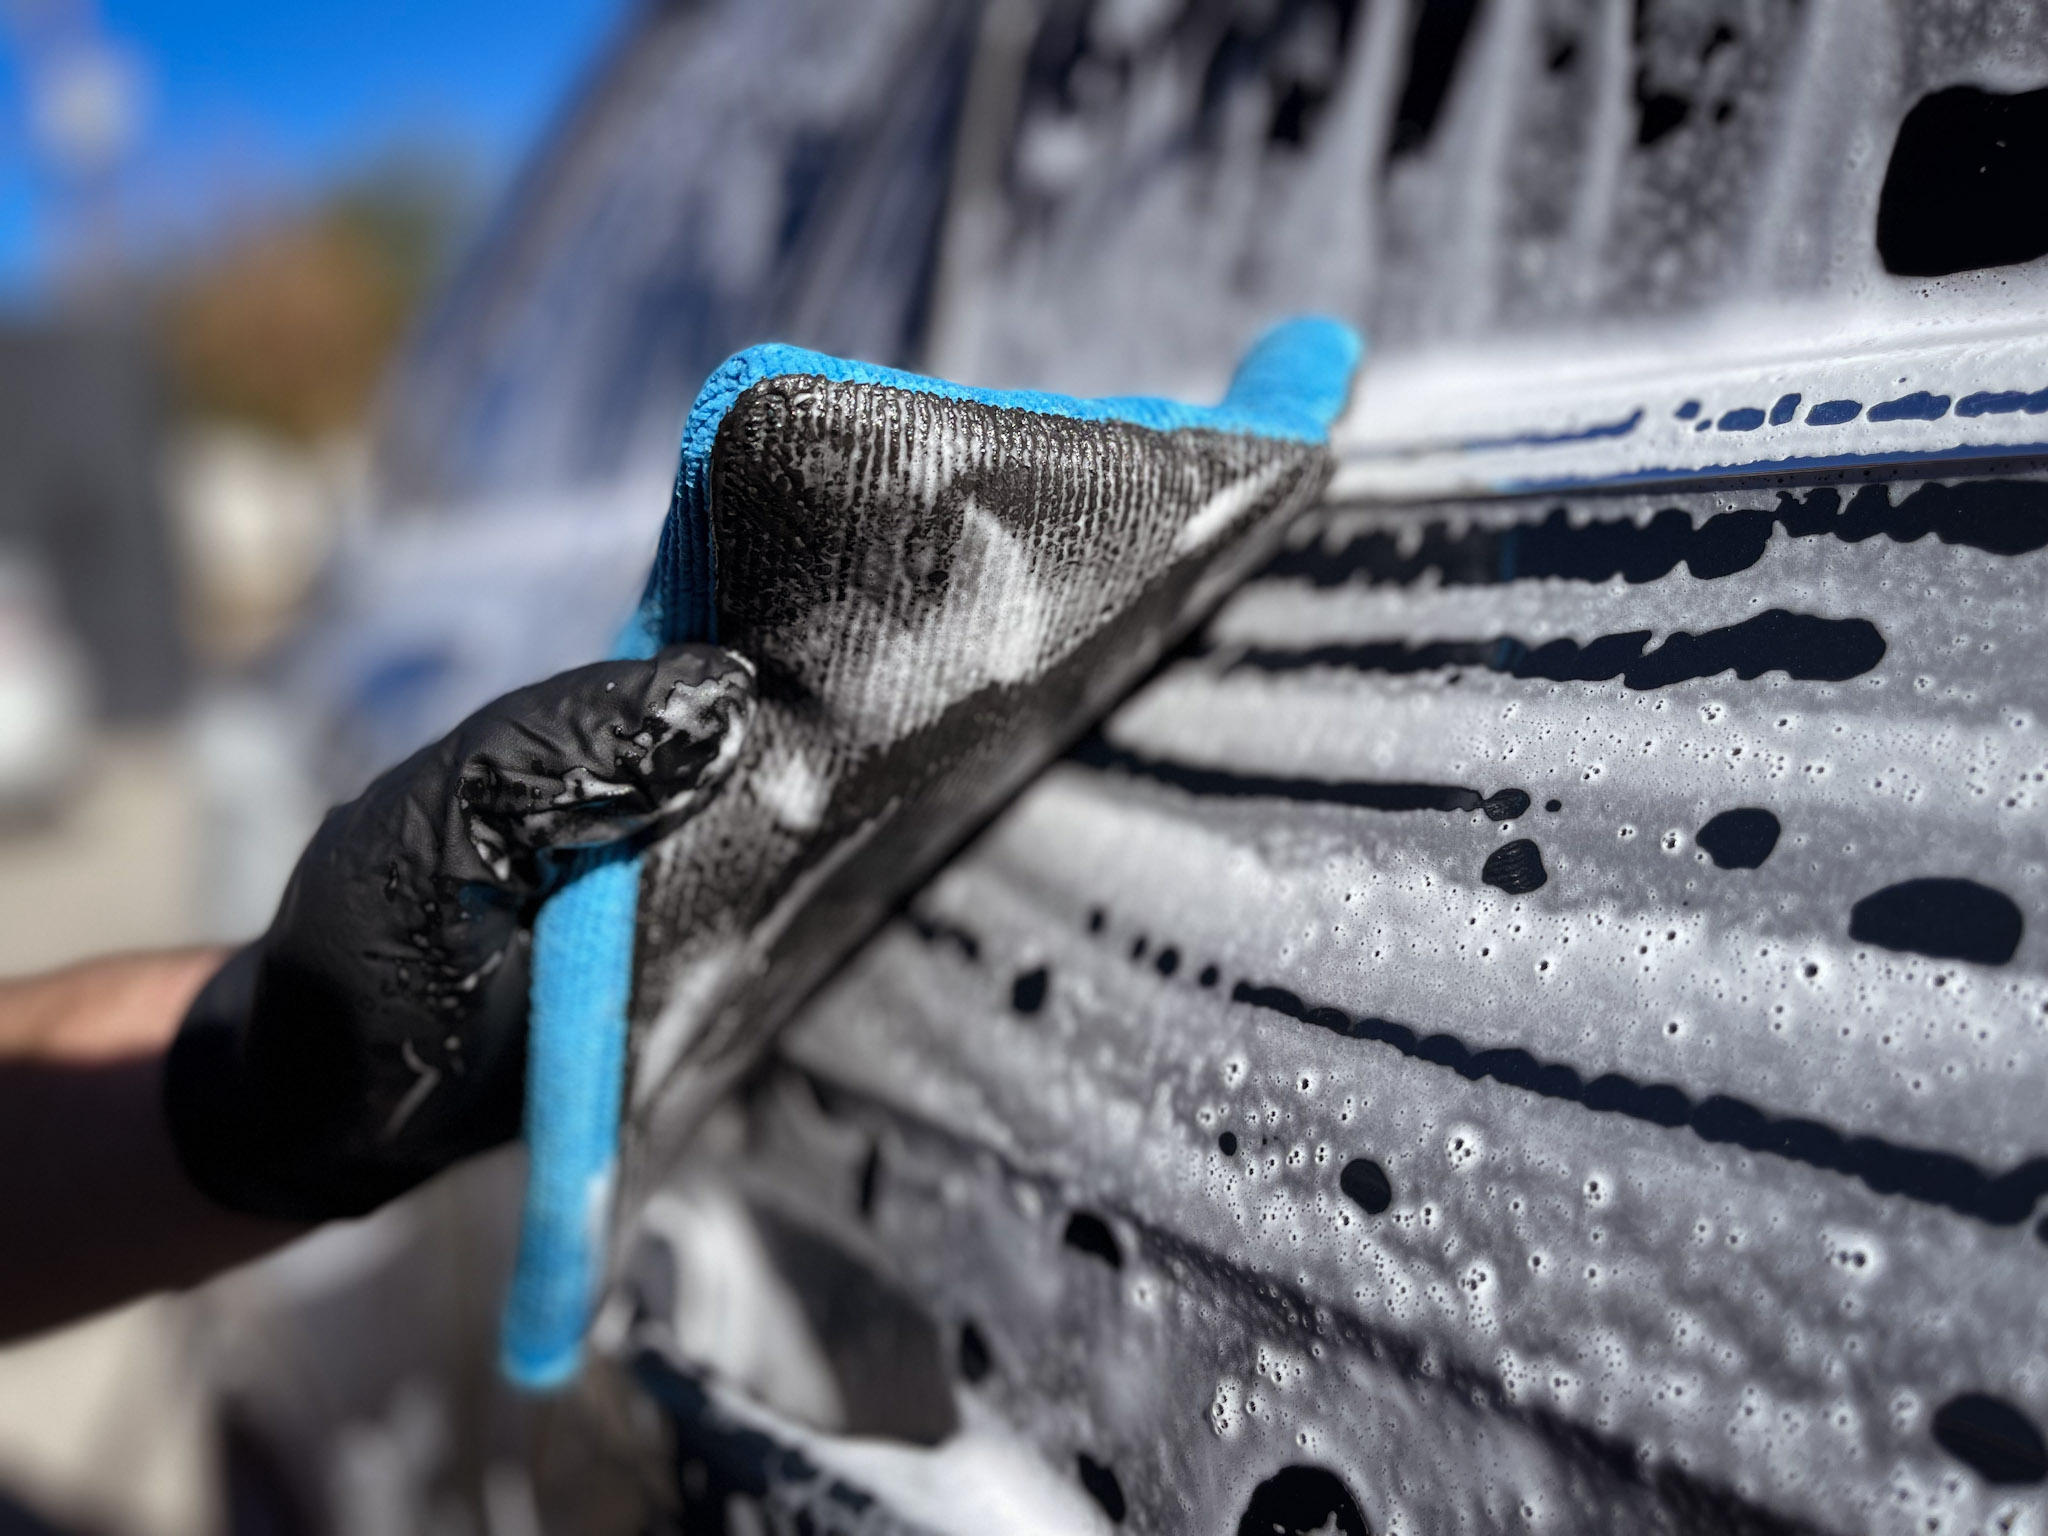 car-wash